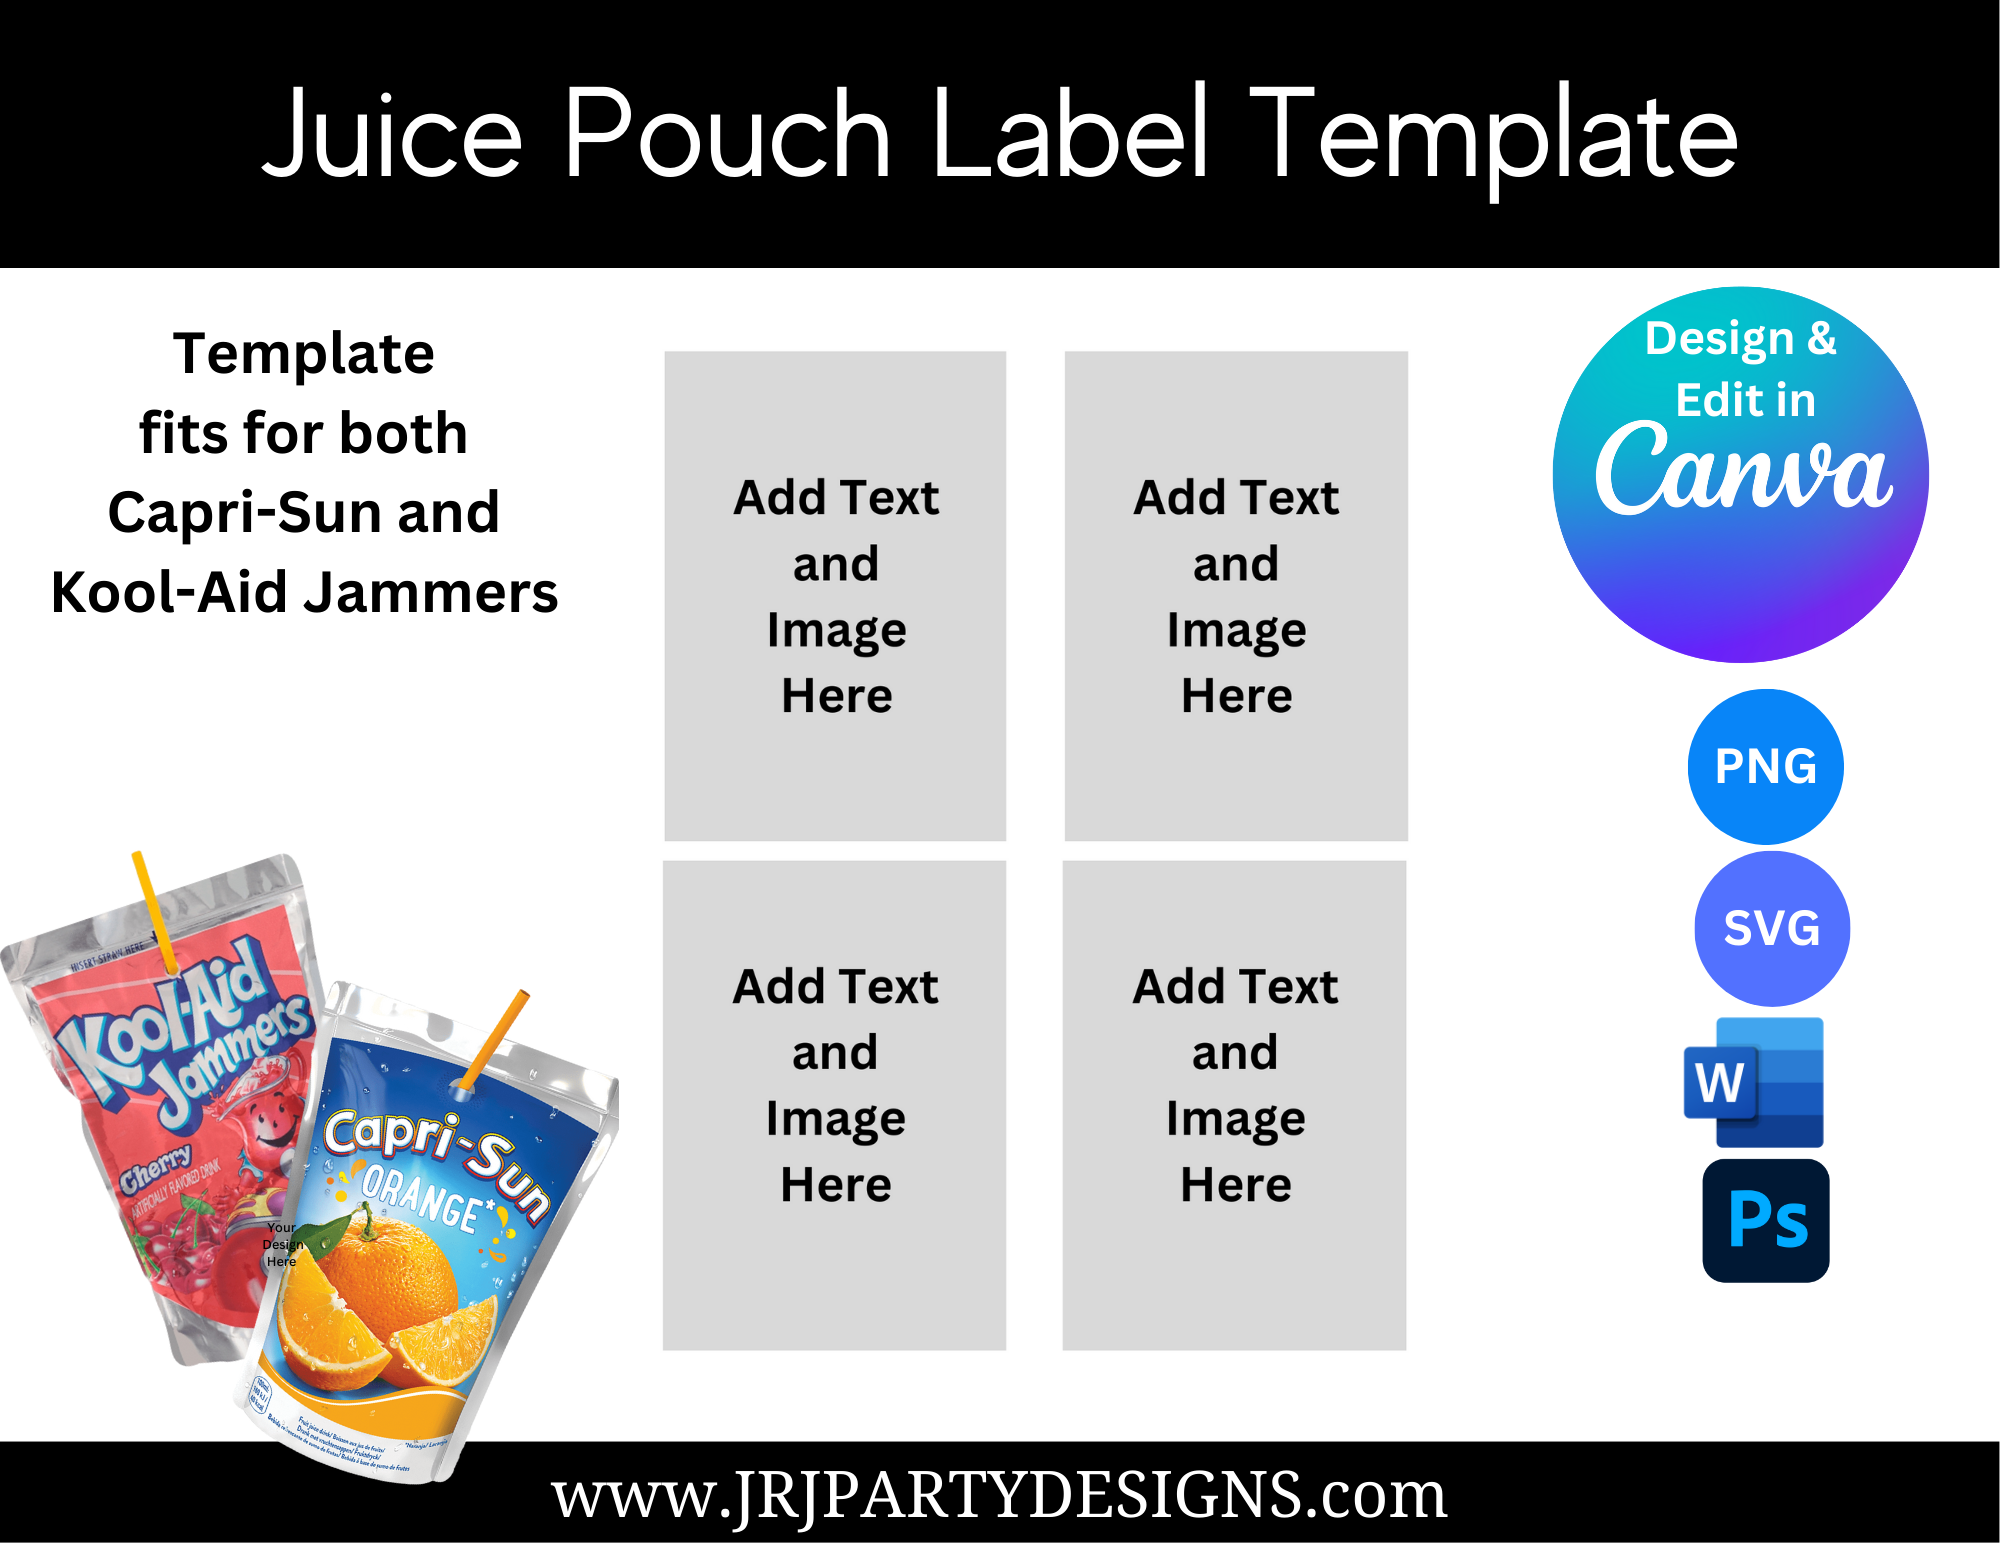 Juice Pouch Label Template